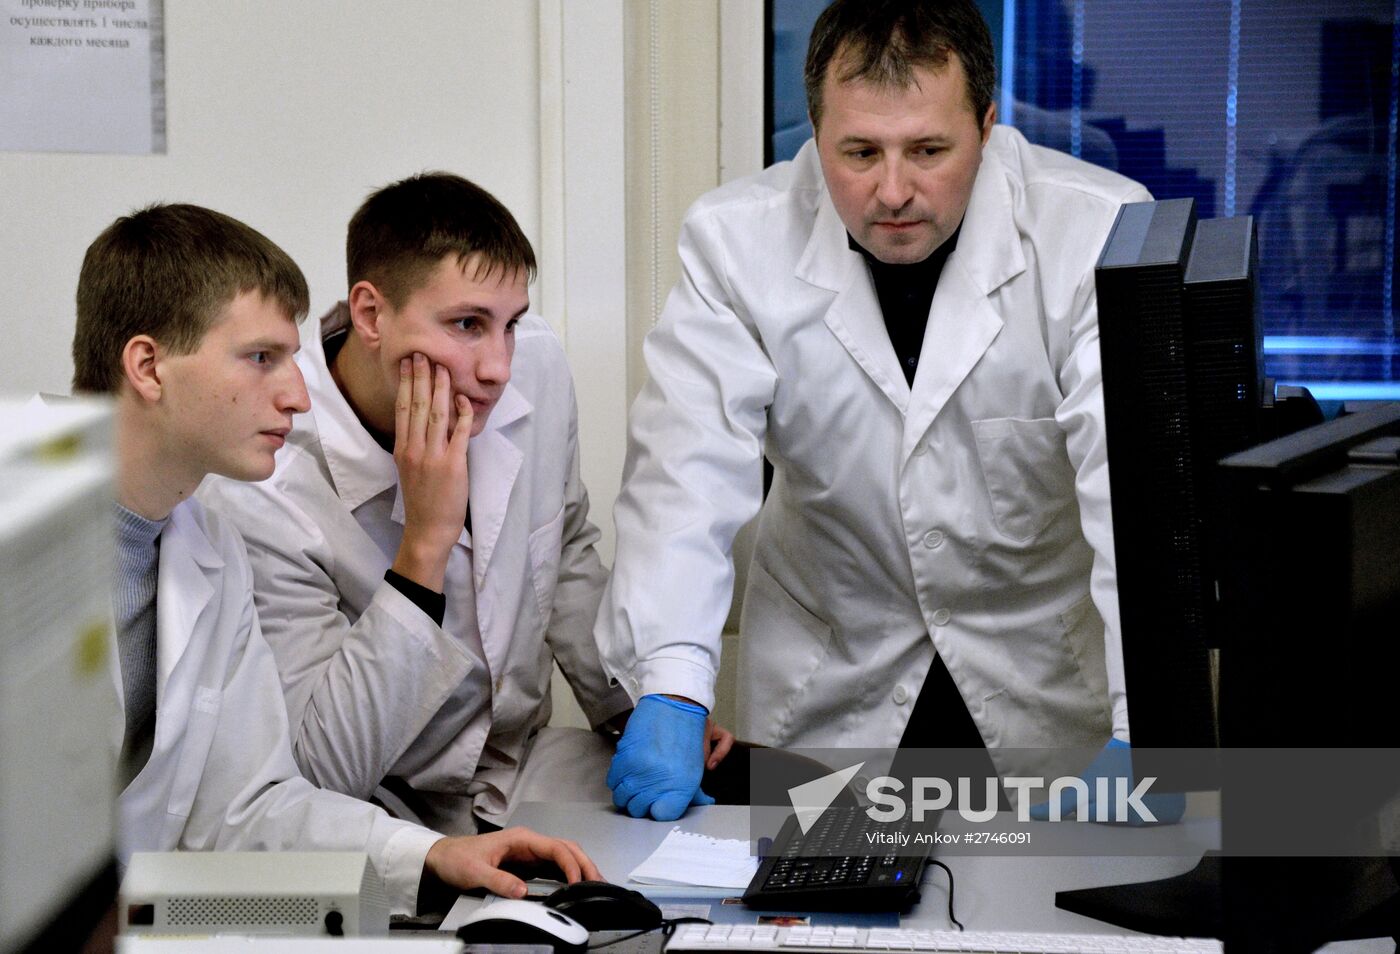 Laboratory of biomedical cell technologies in Vladivostok